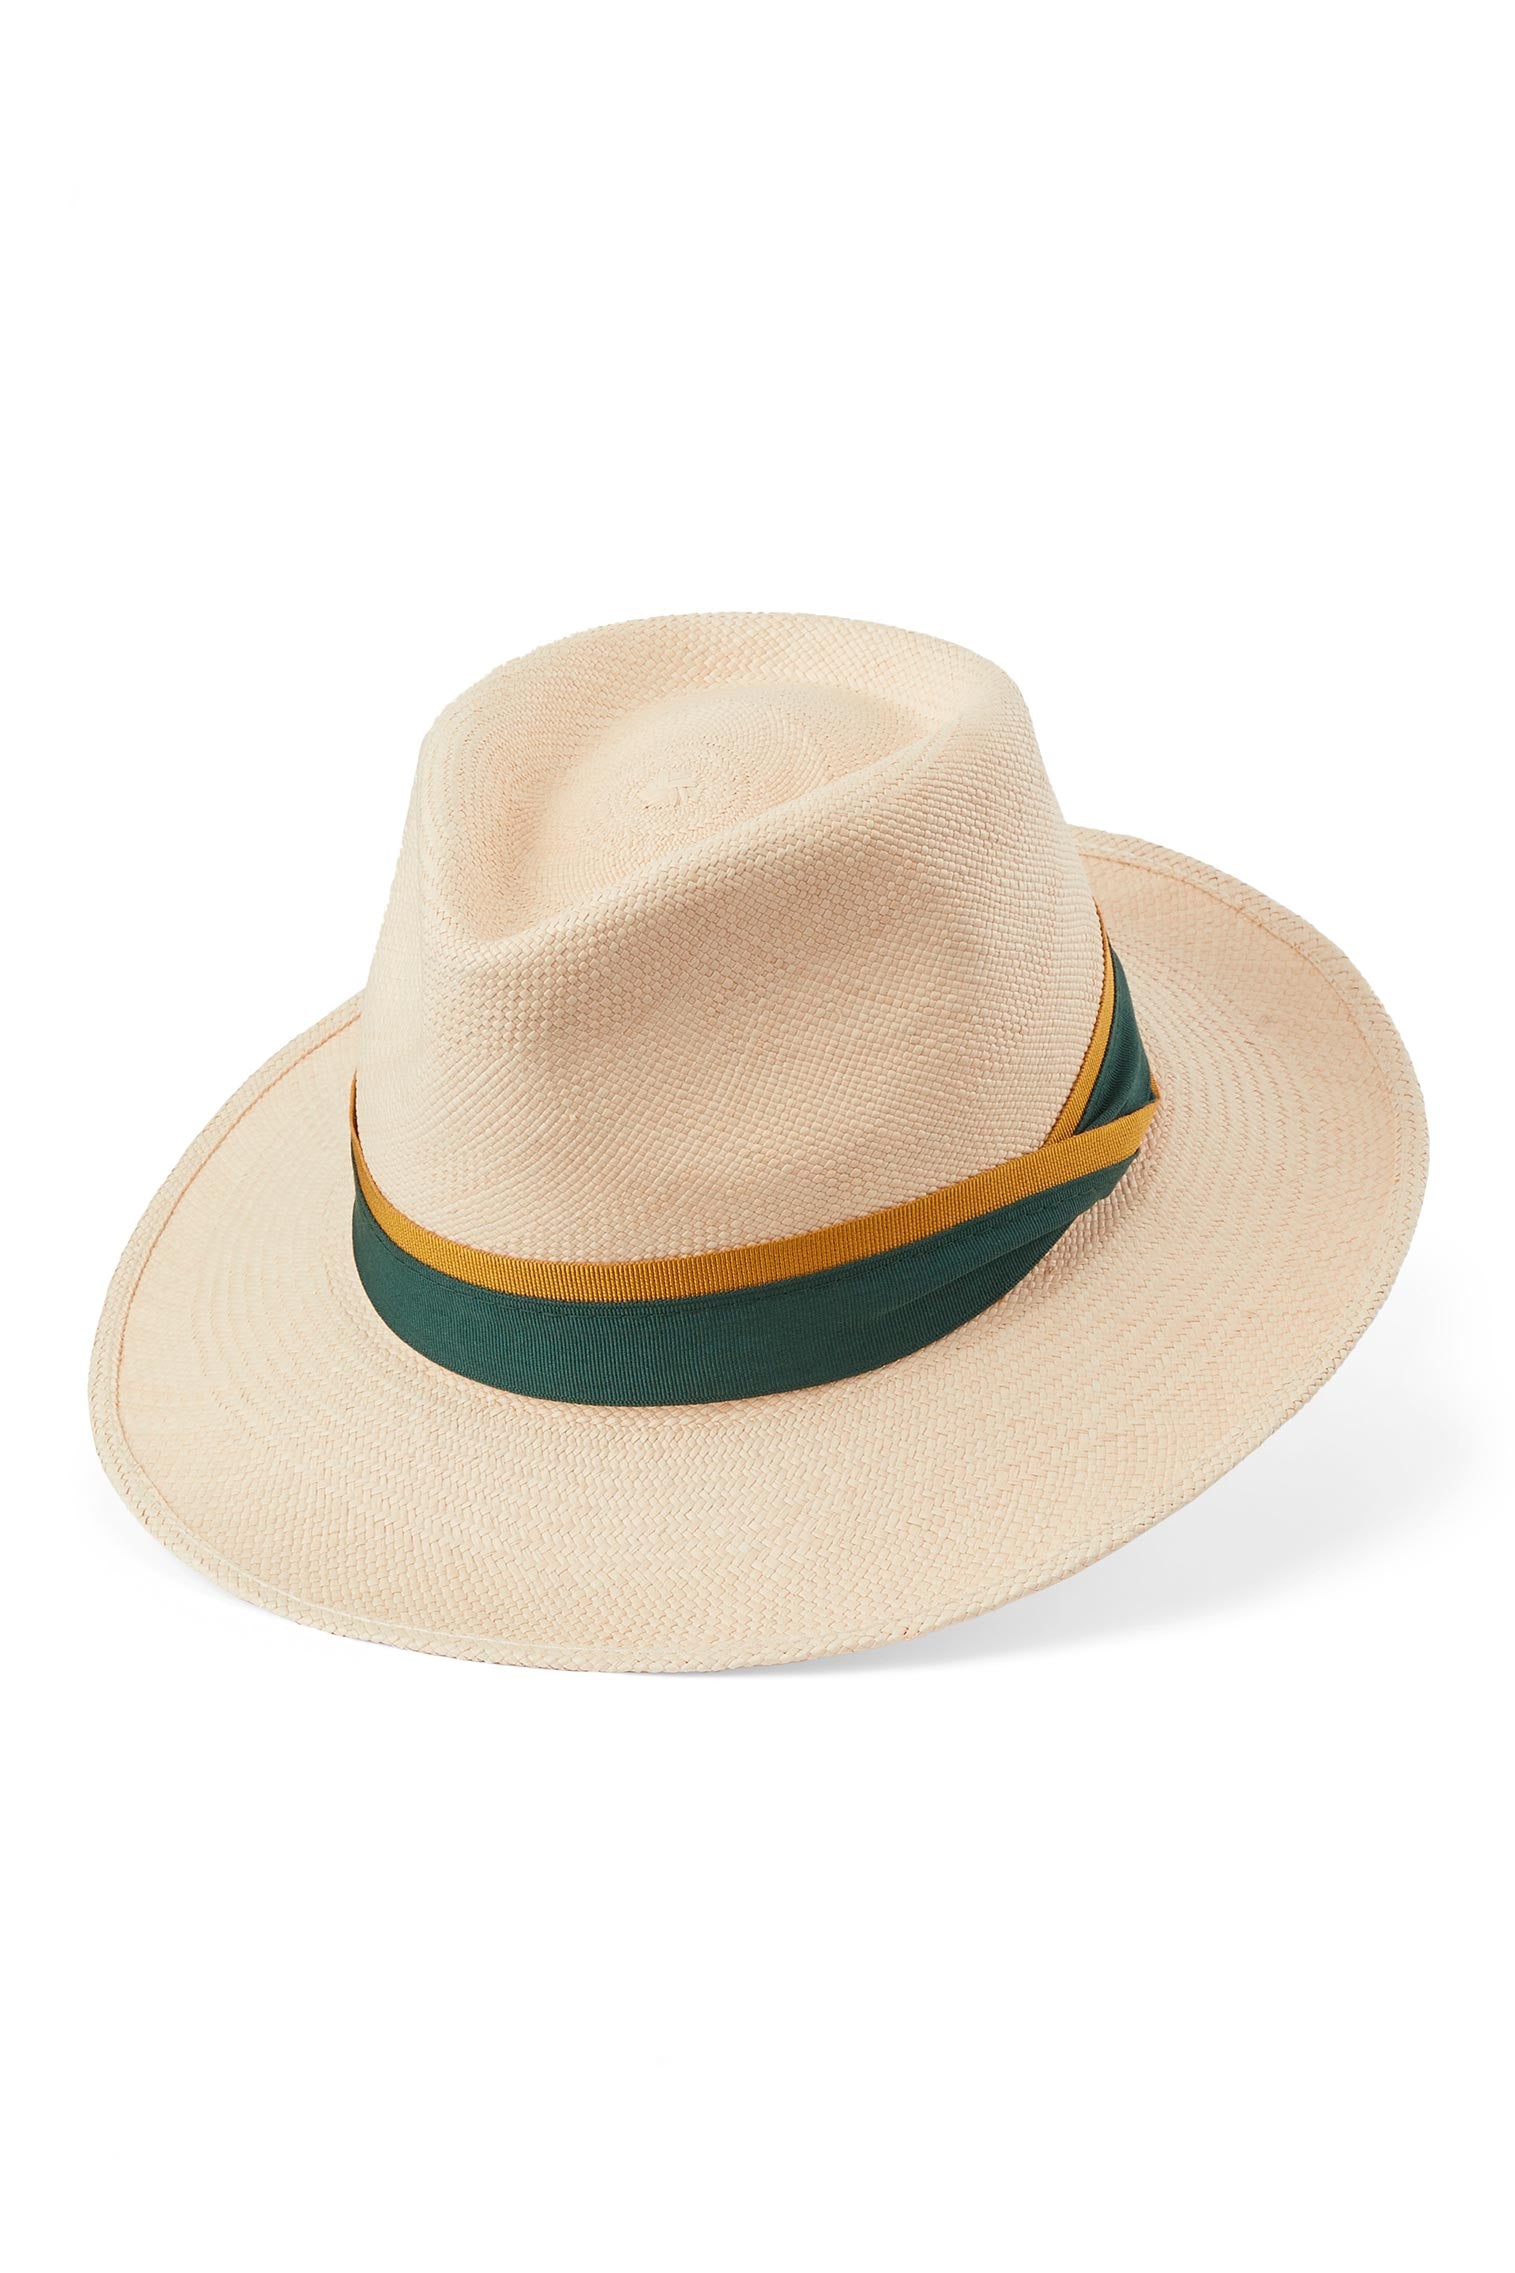 Highgrove Panama - New Season Hat Collection - Lock & Co. Hatters London UK